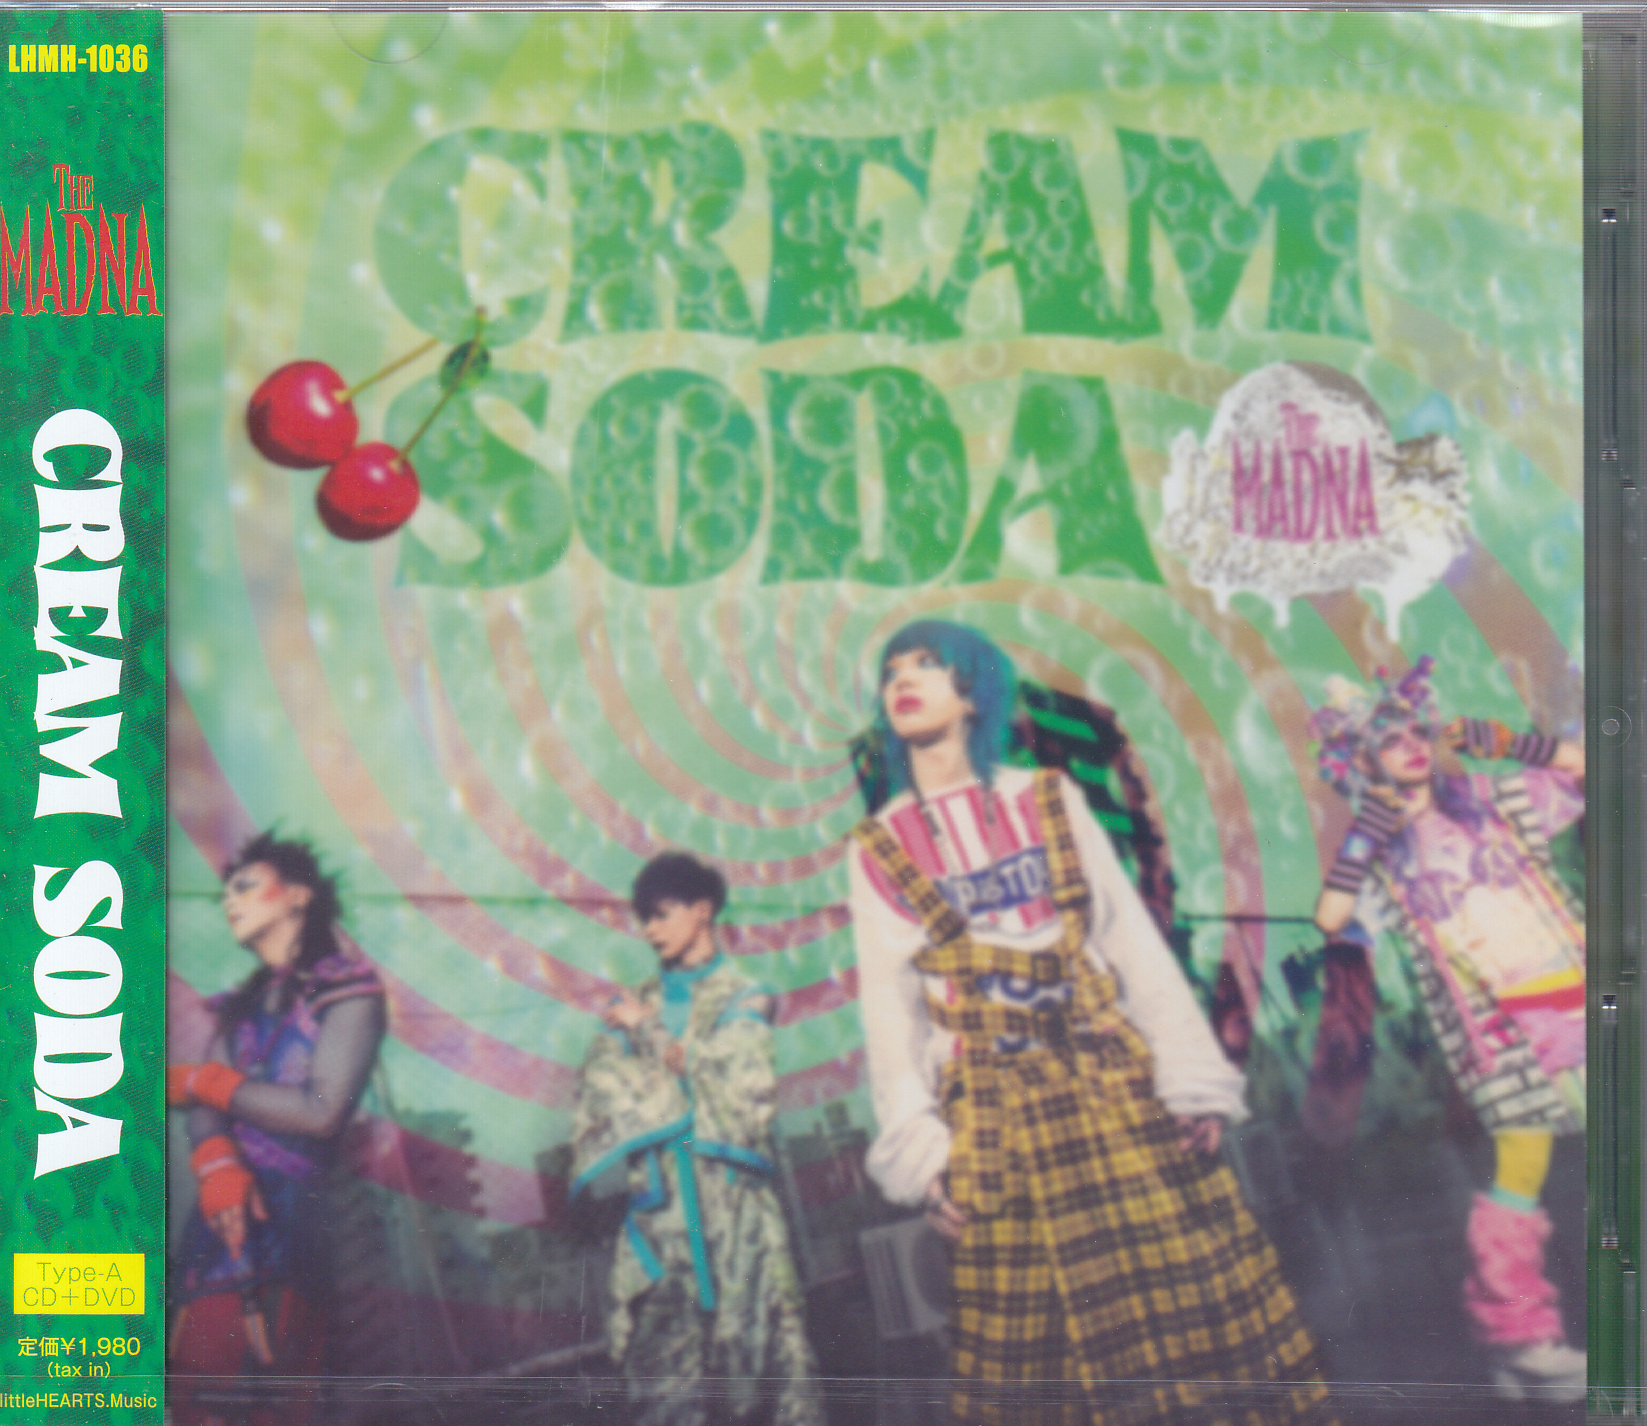 THE MADNA ( マドンナ )  の CD 【Type-A】CREAM SODA